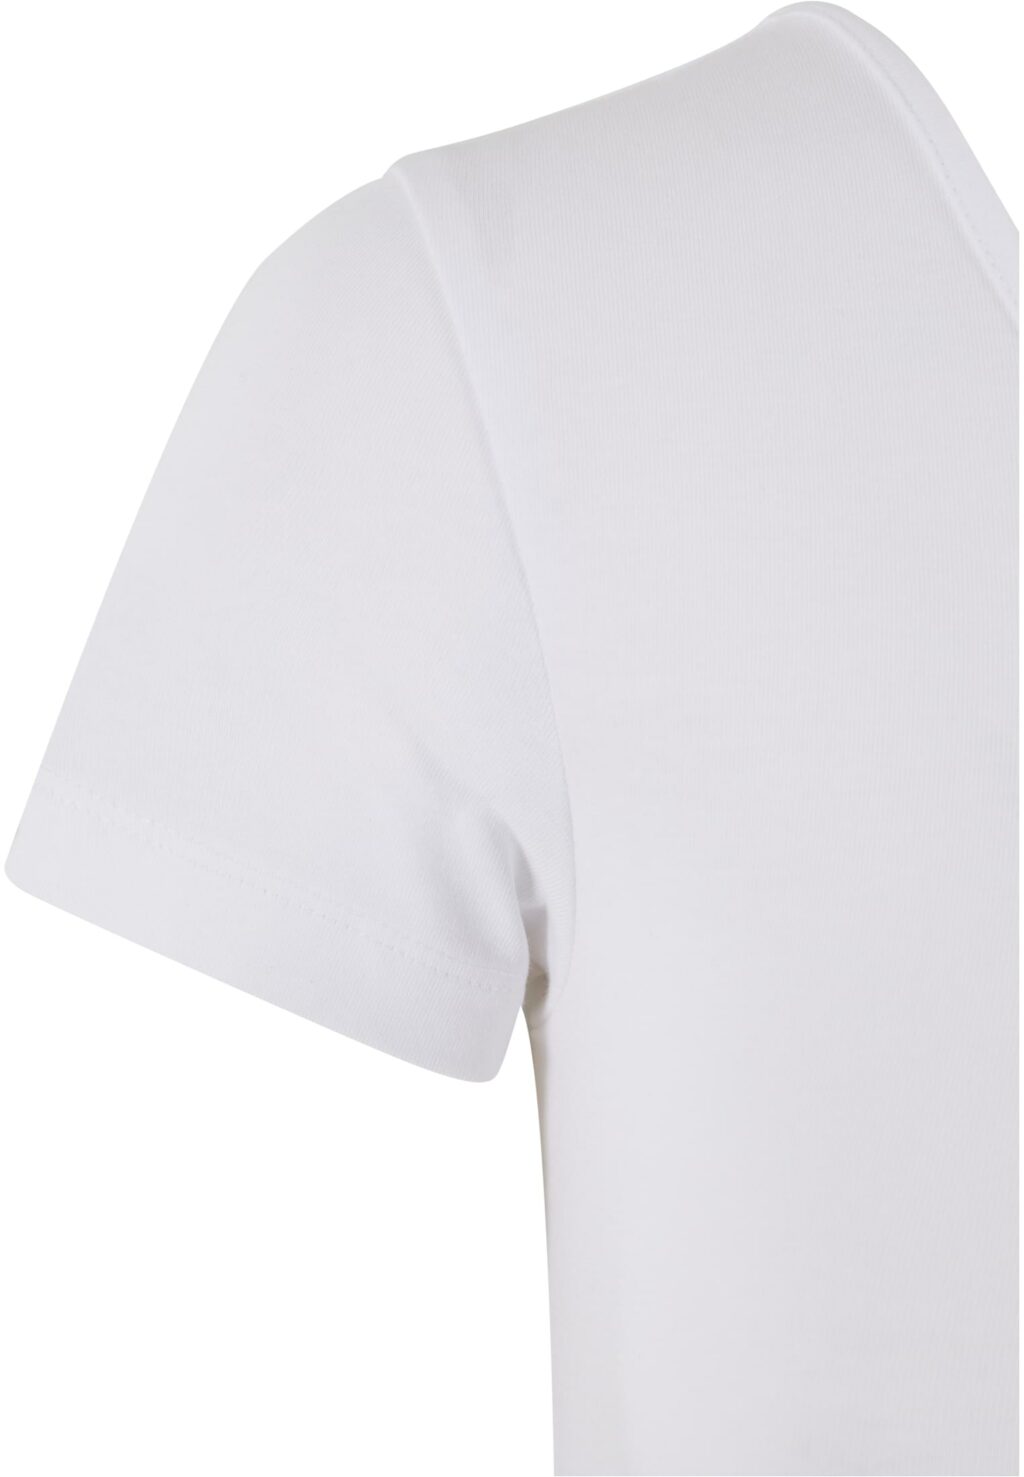 Urban Classics Ladies Organic Stretch Jersey Body 2-Pack white+white TB6170A